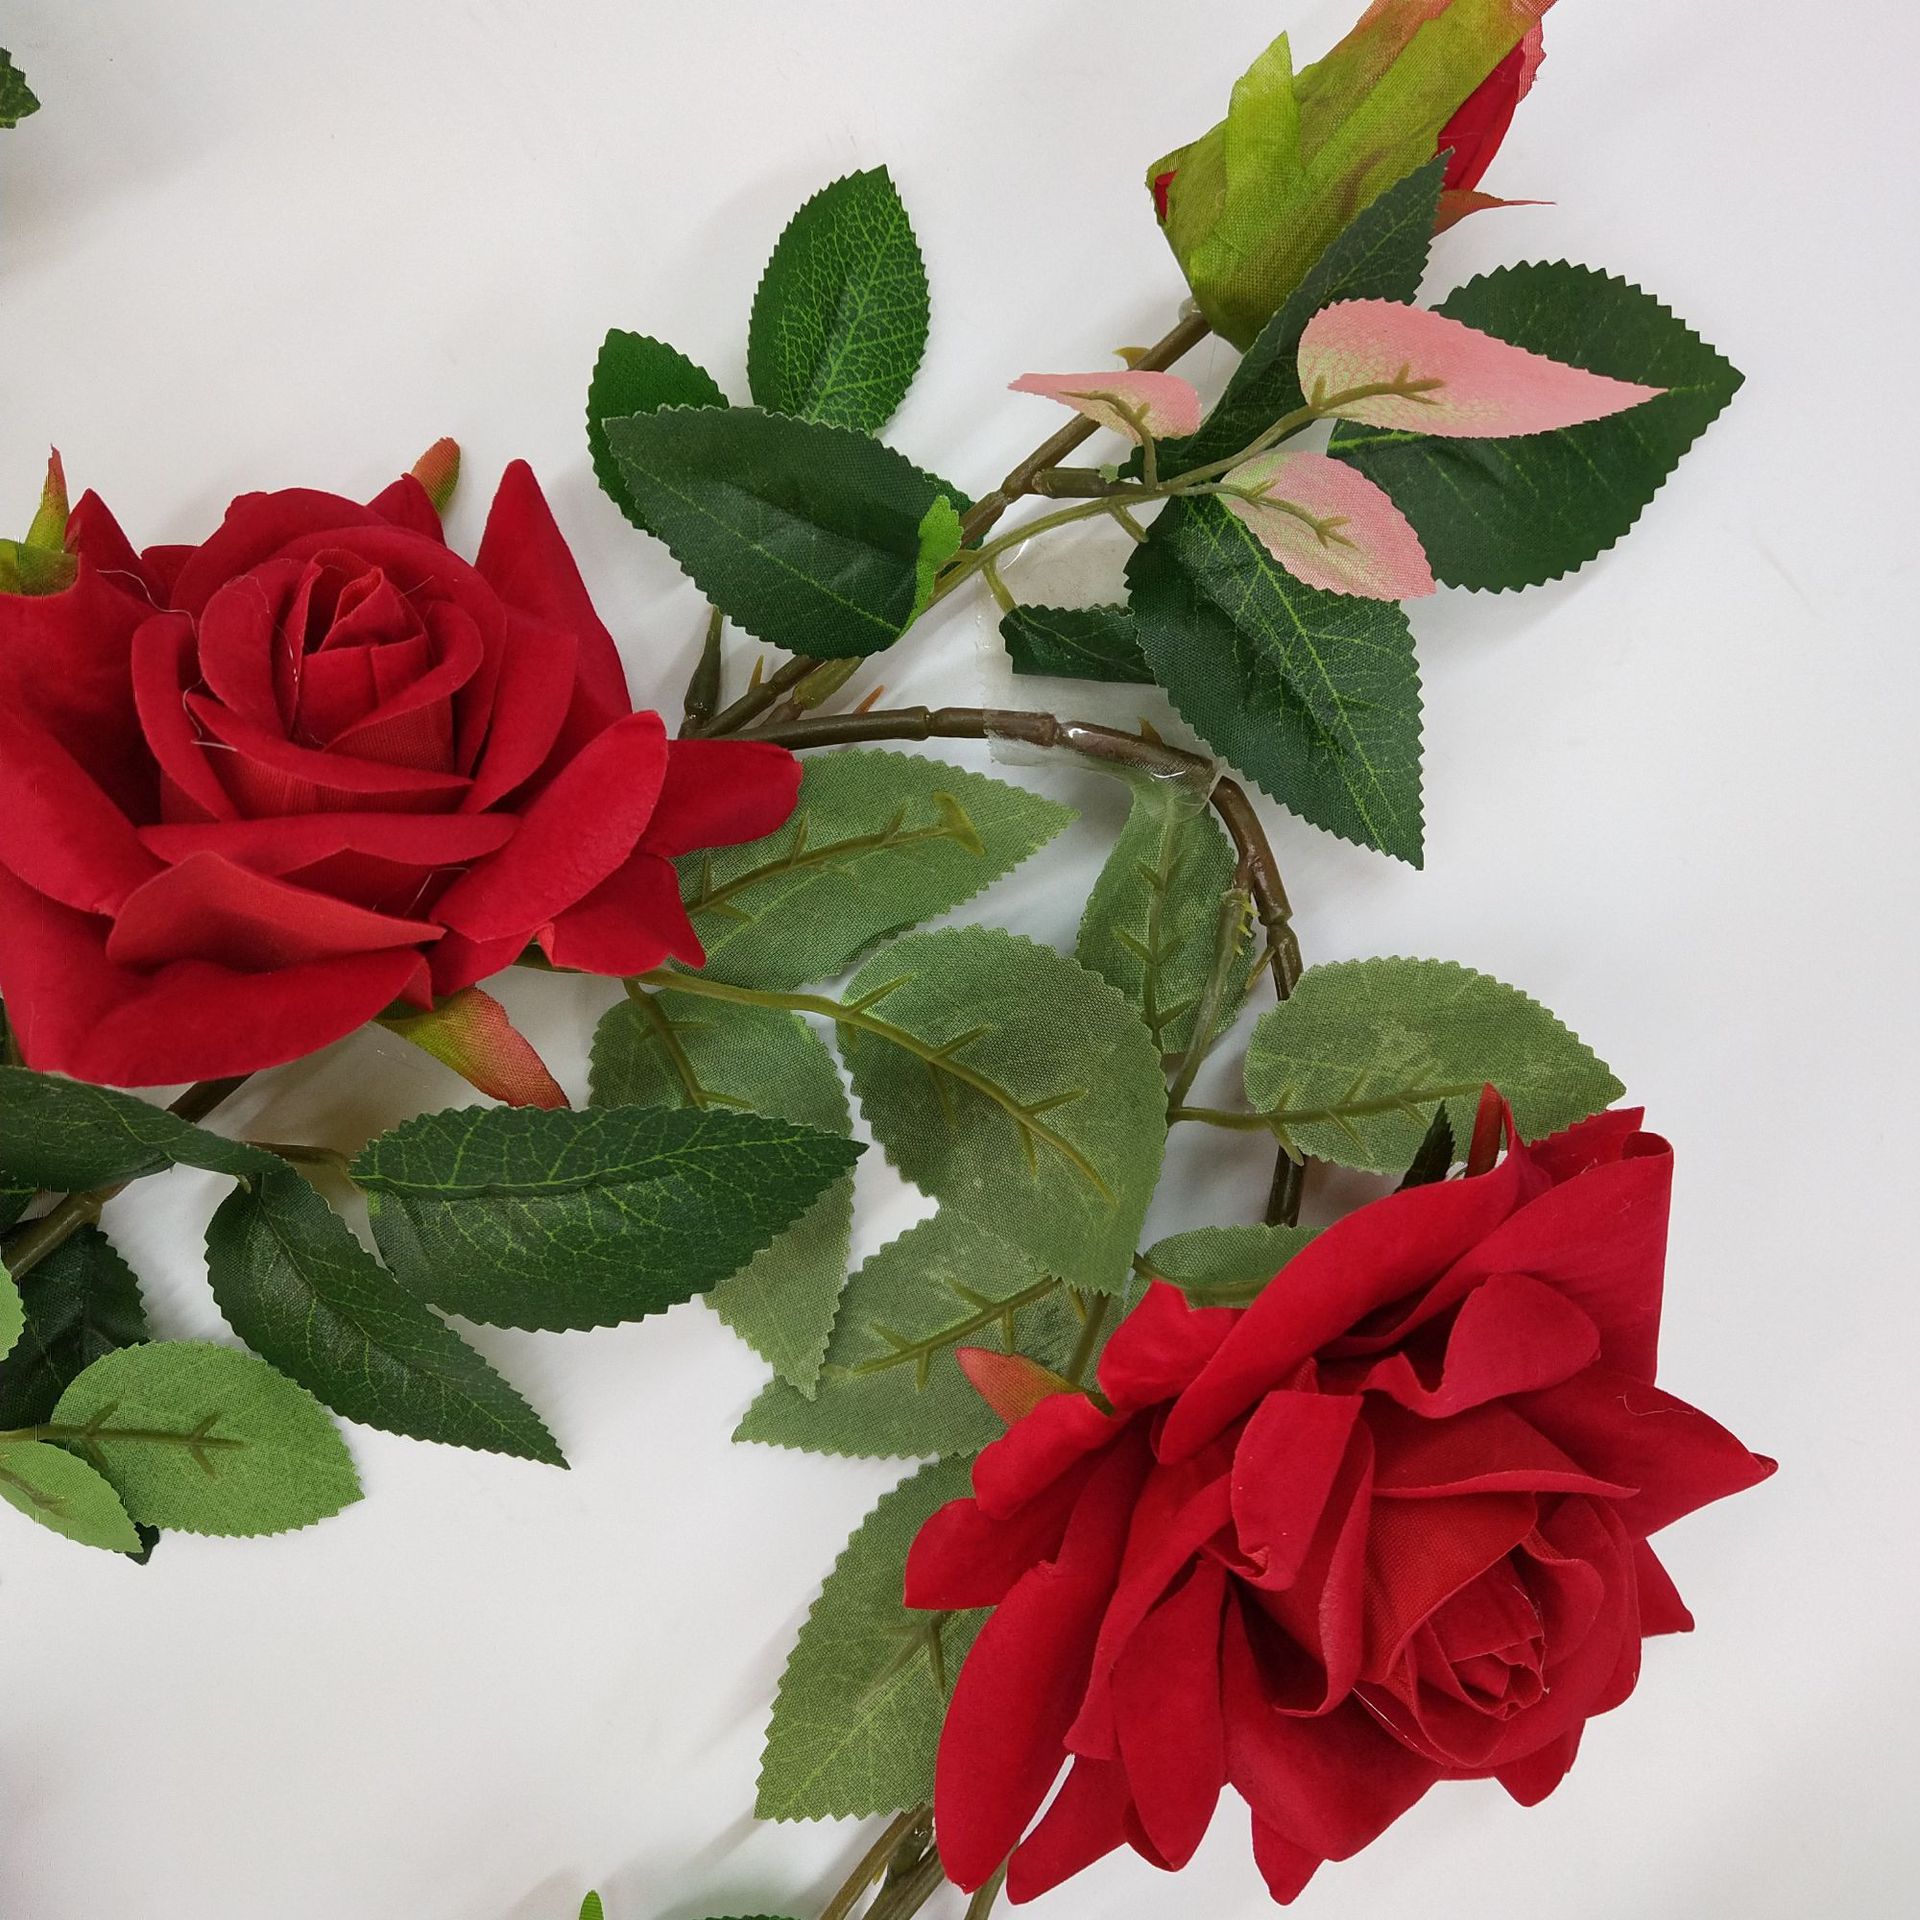 Kunstig silke blomsterbuket fløjl rose pæon krans krans grøn plante valentinsdag bryllup fødselsdagsfest dekor